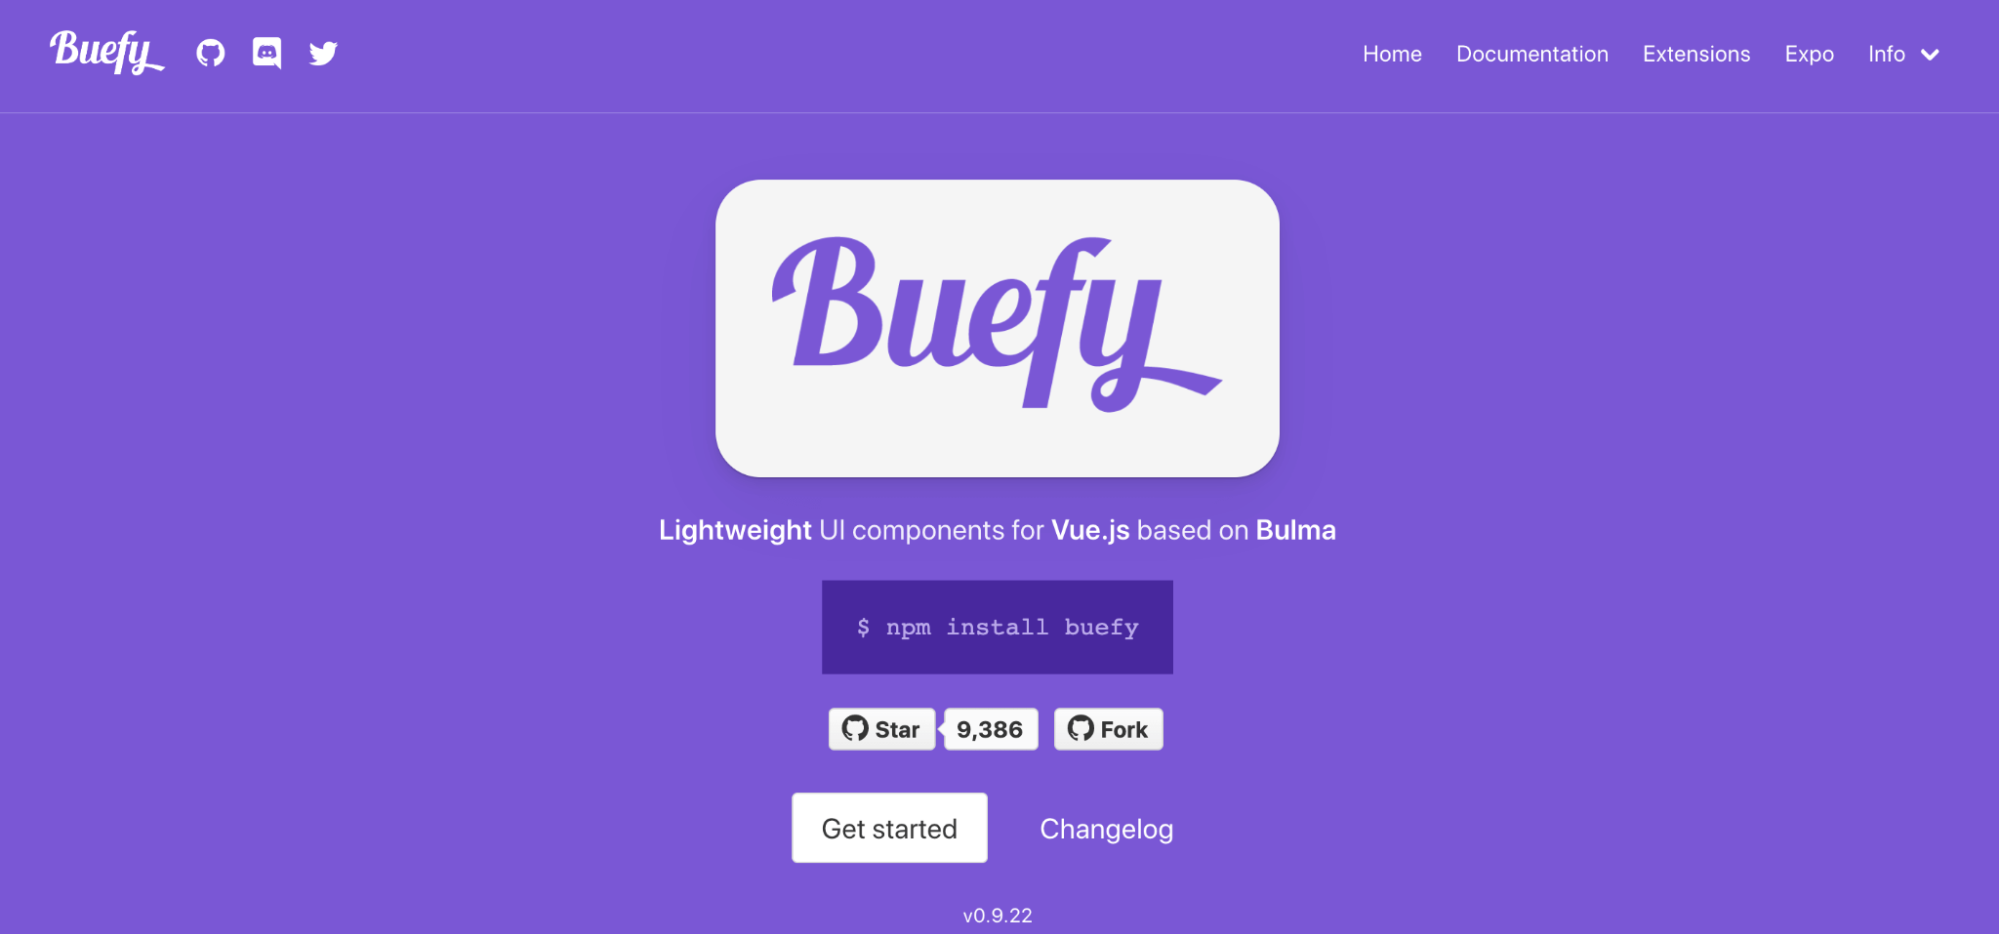 Screenshot: The Buefy homepage.